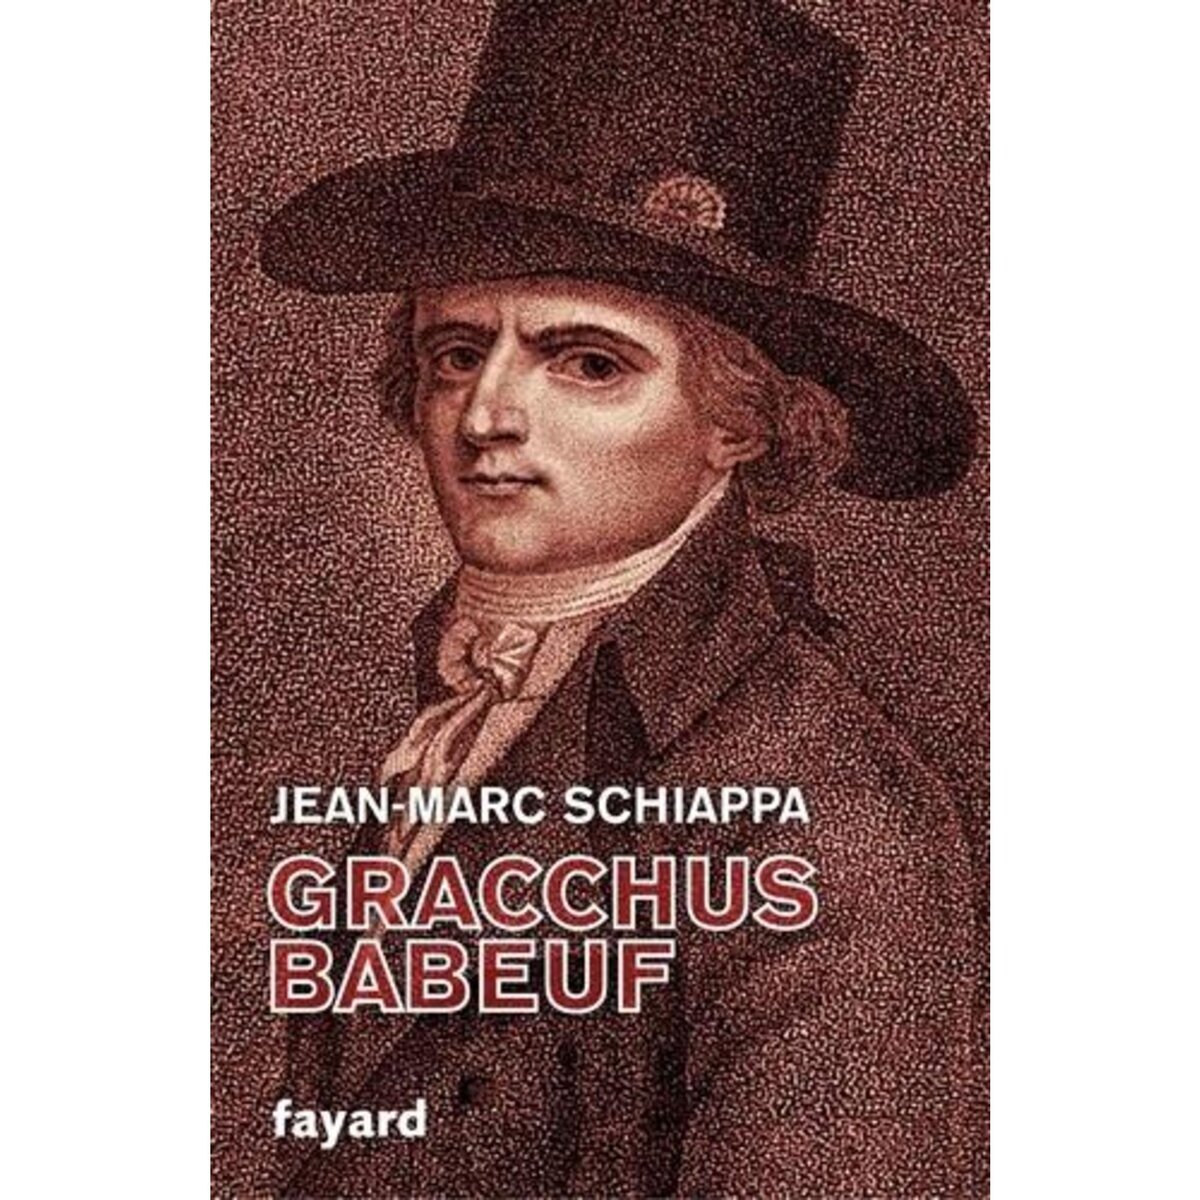  GRACCHUS BABEUF, Schiappa Jean-Marc